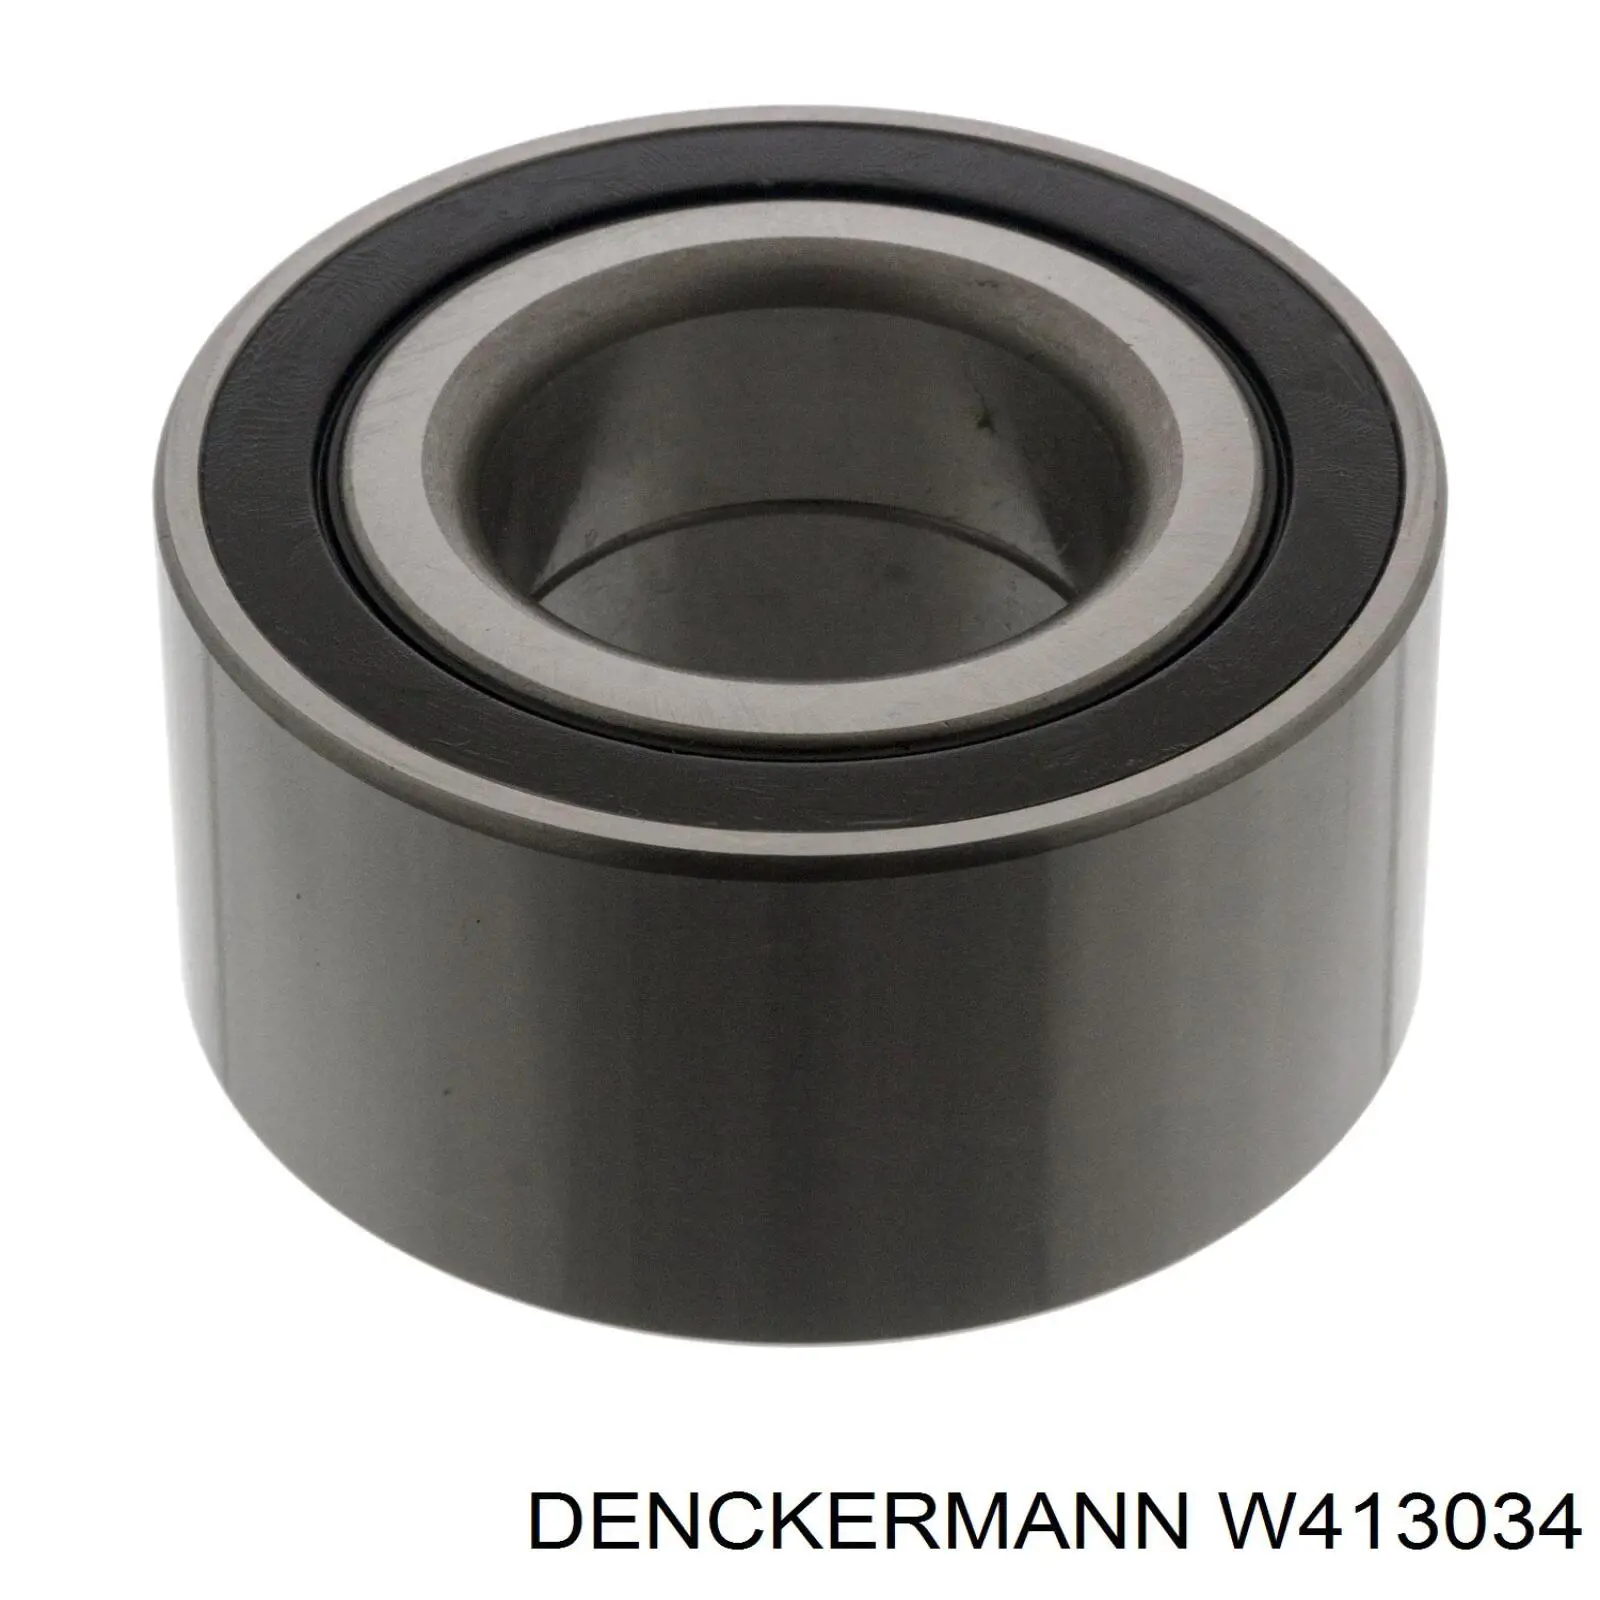 W413034 Denckermann cojinete de rueda trasero